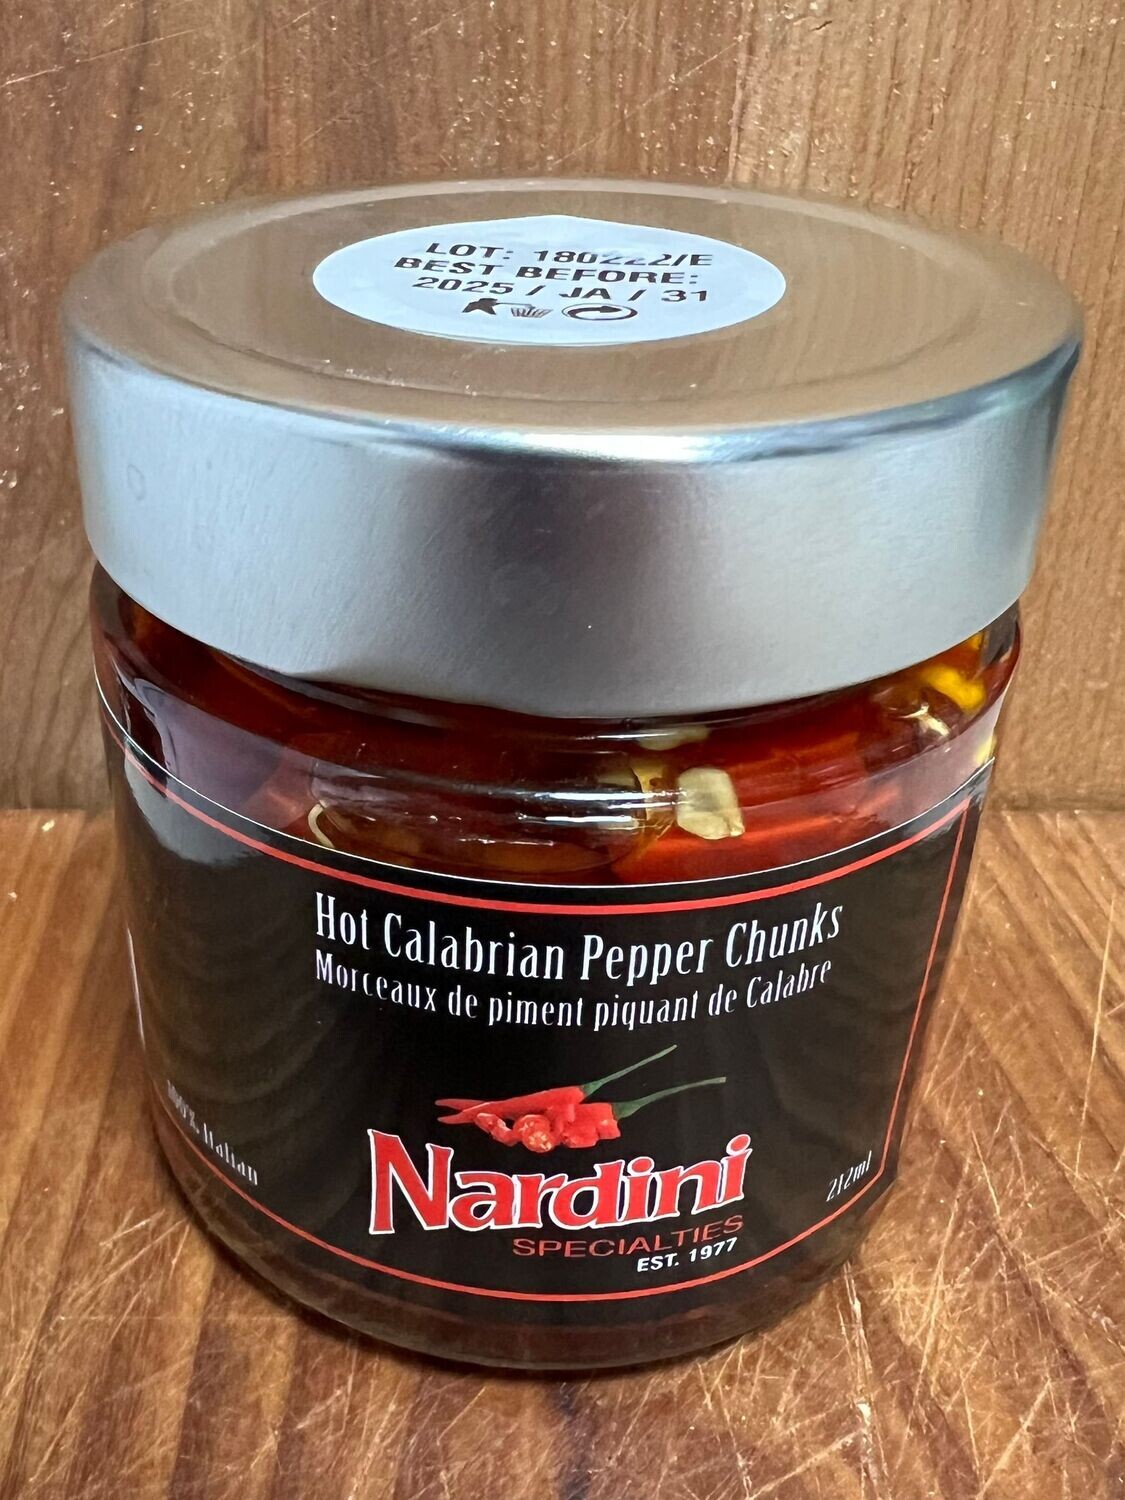 Hot Calabrian Pepper Chunks - Nardini Private Label